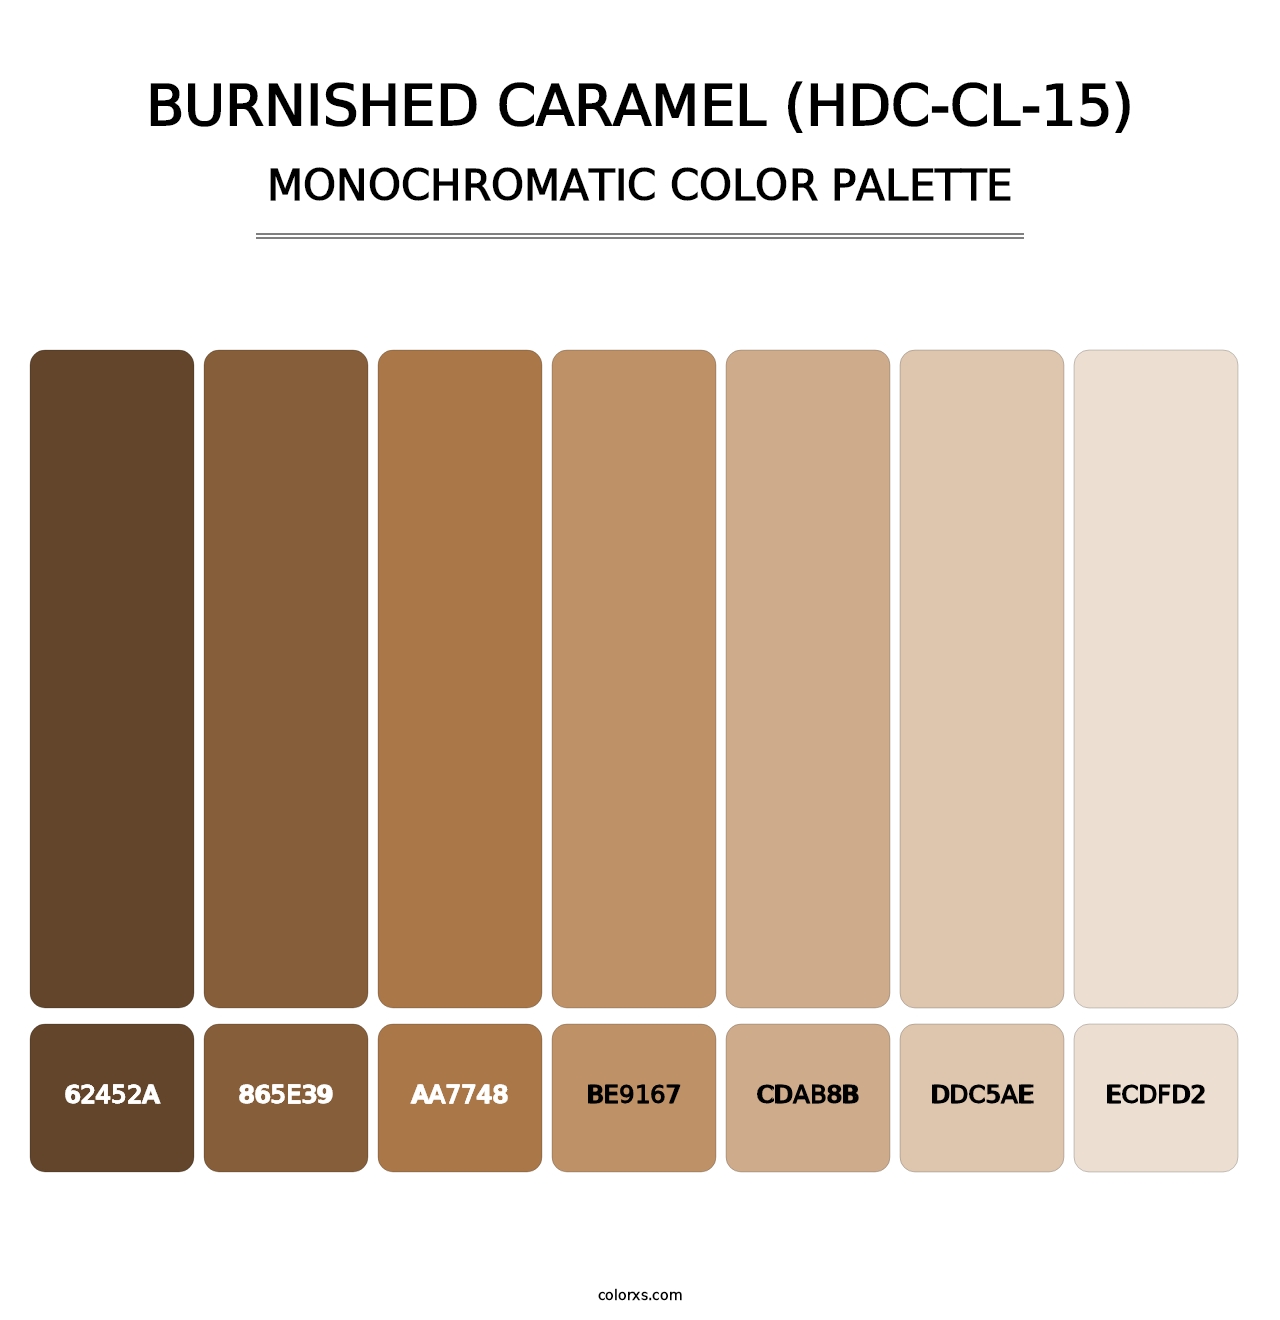 Burnished Caramel (HDC-CL-15) - Monochromatic Color Palette